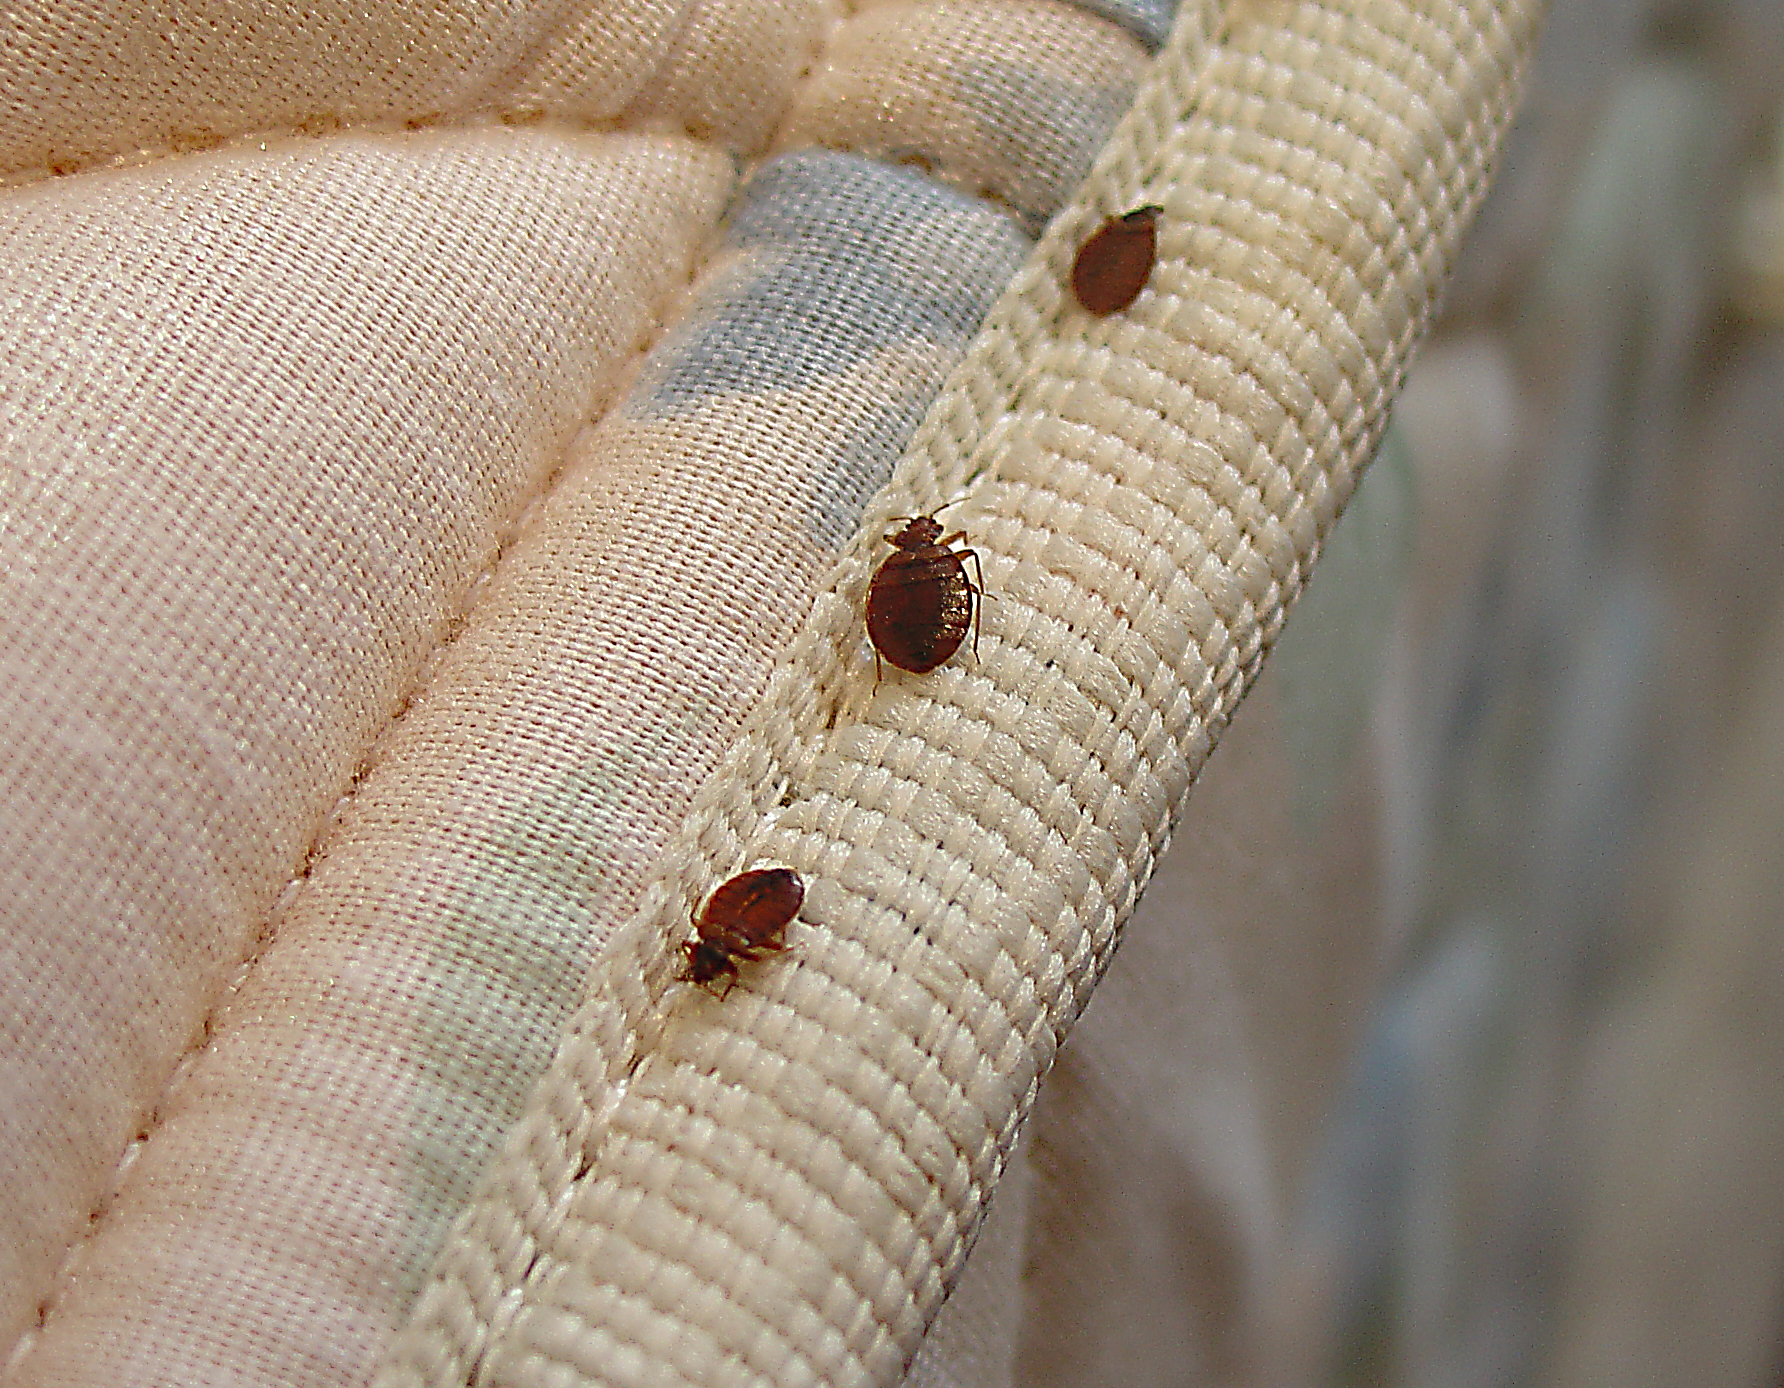 bed bugs but i have bedbug proof mattress